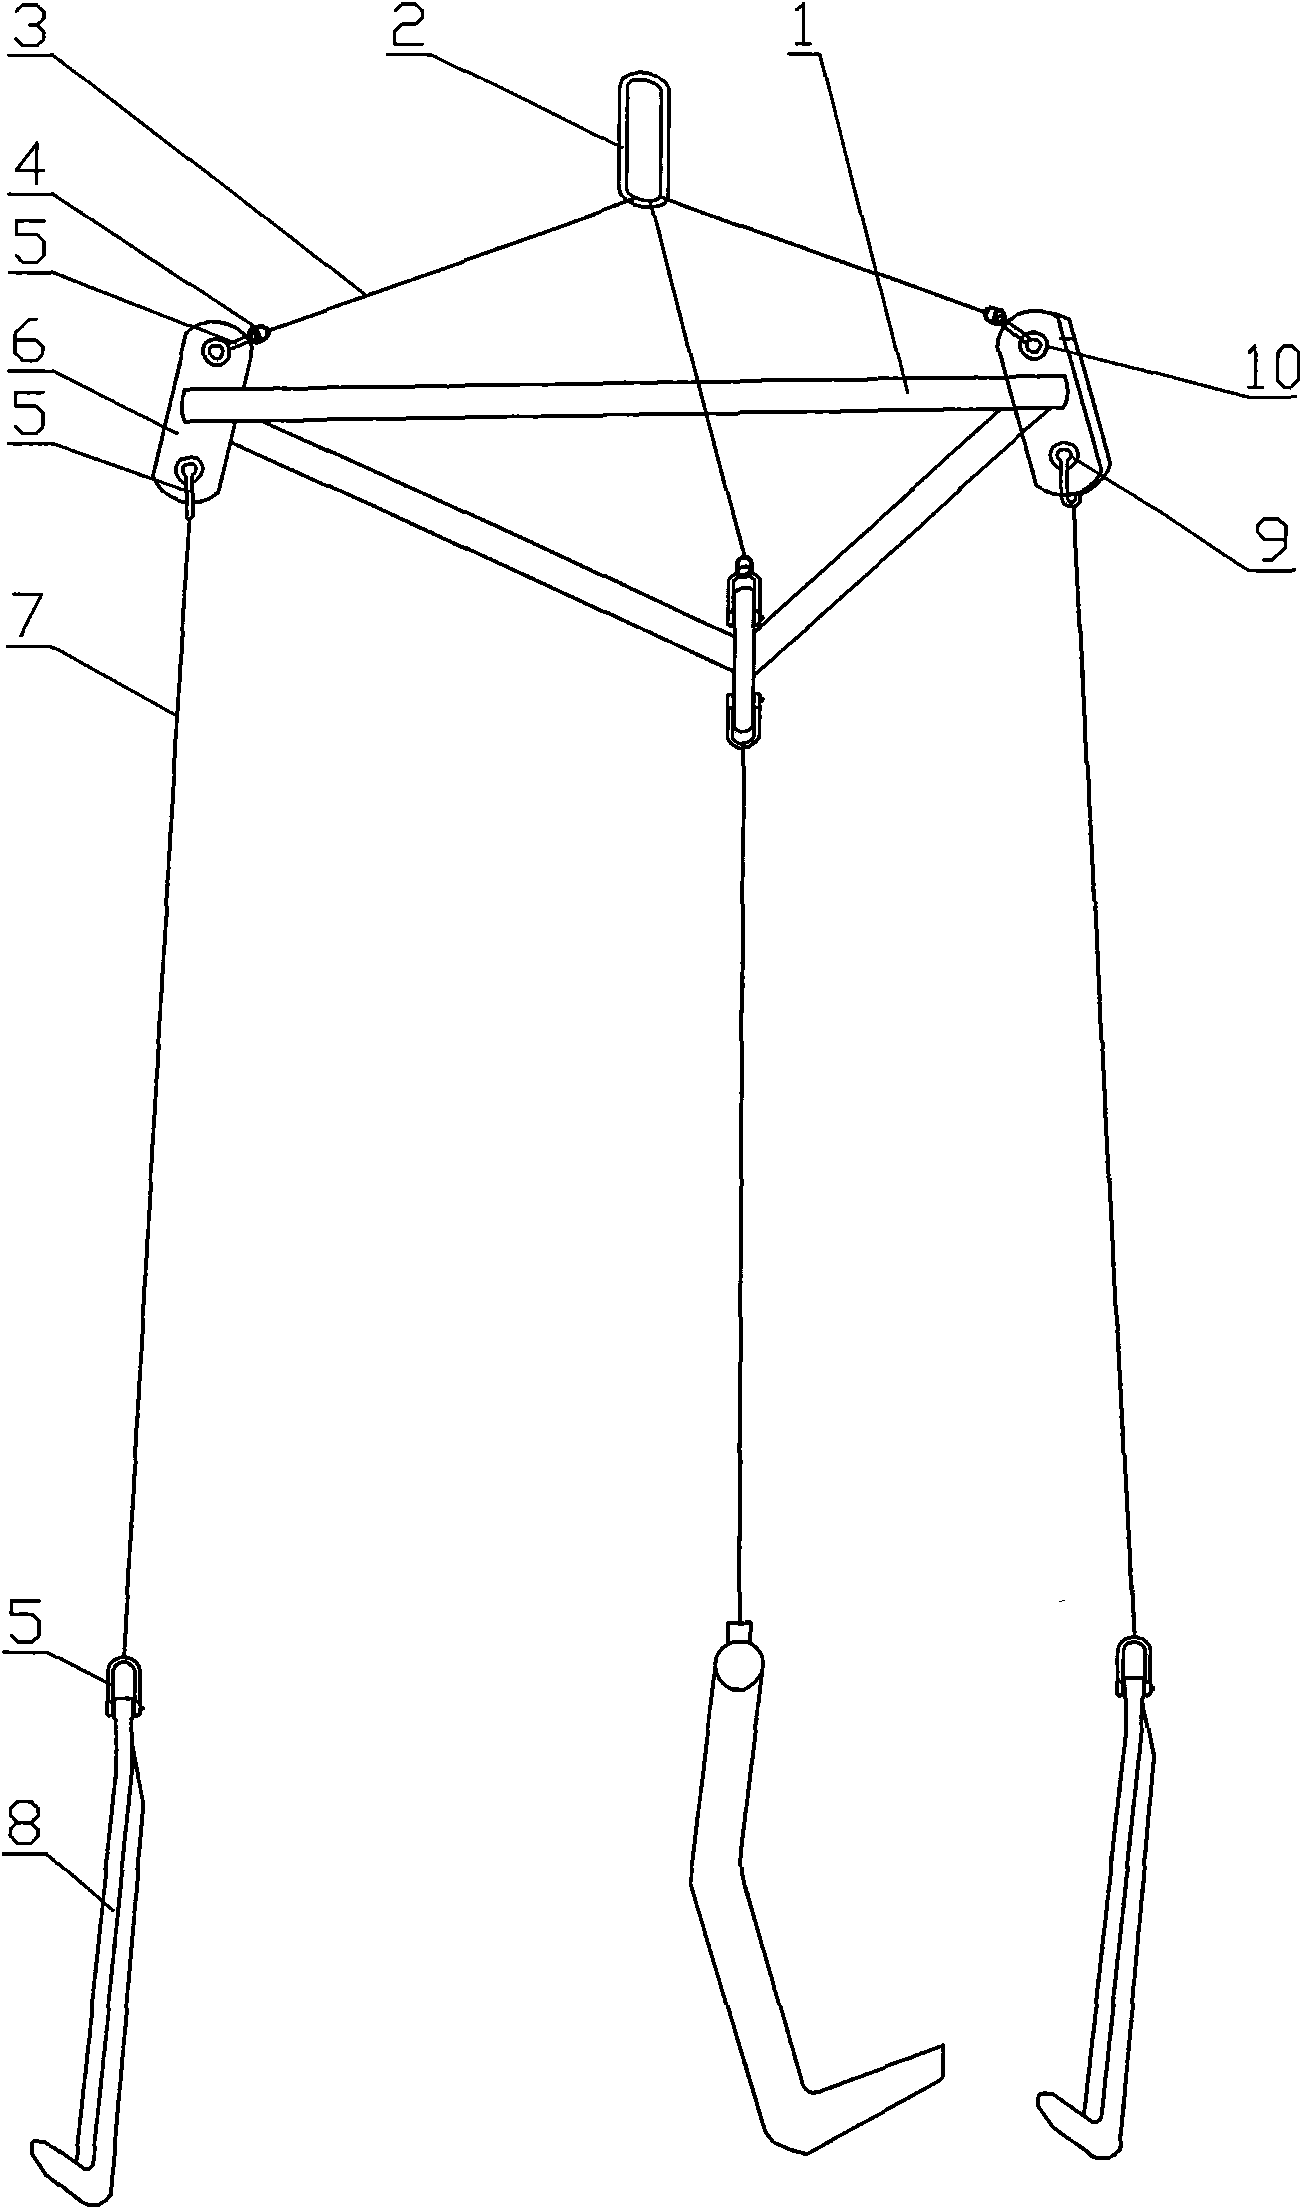 Triangle-type hanger